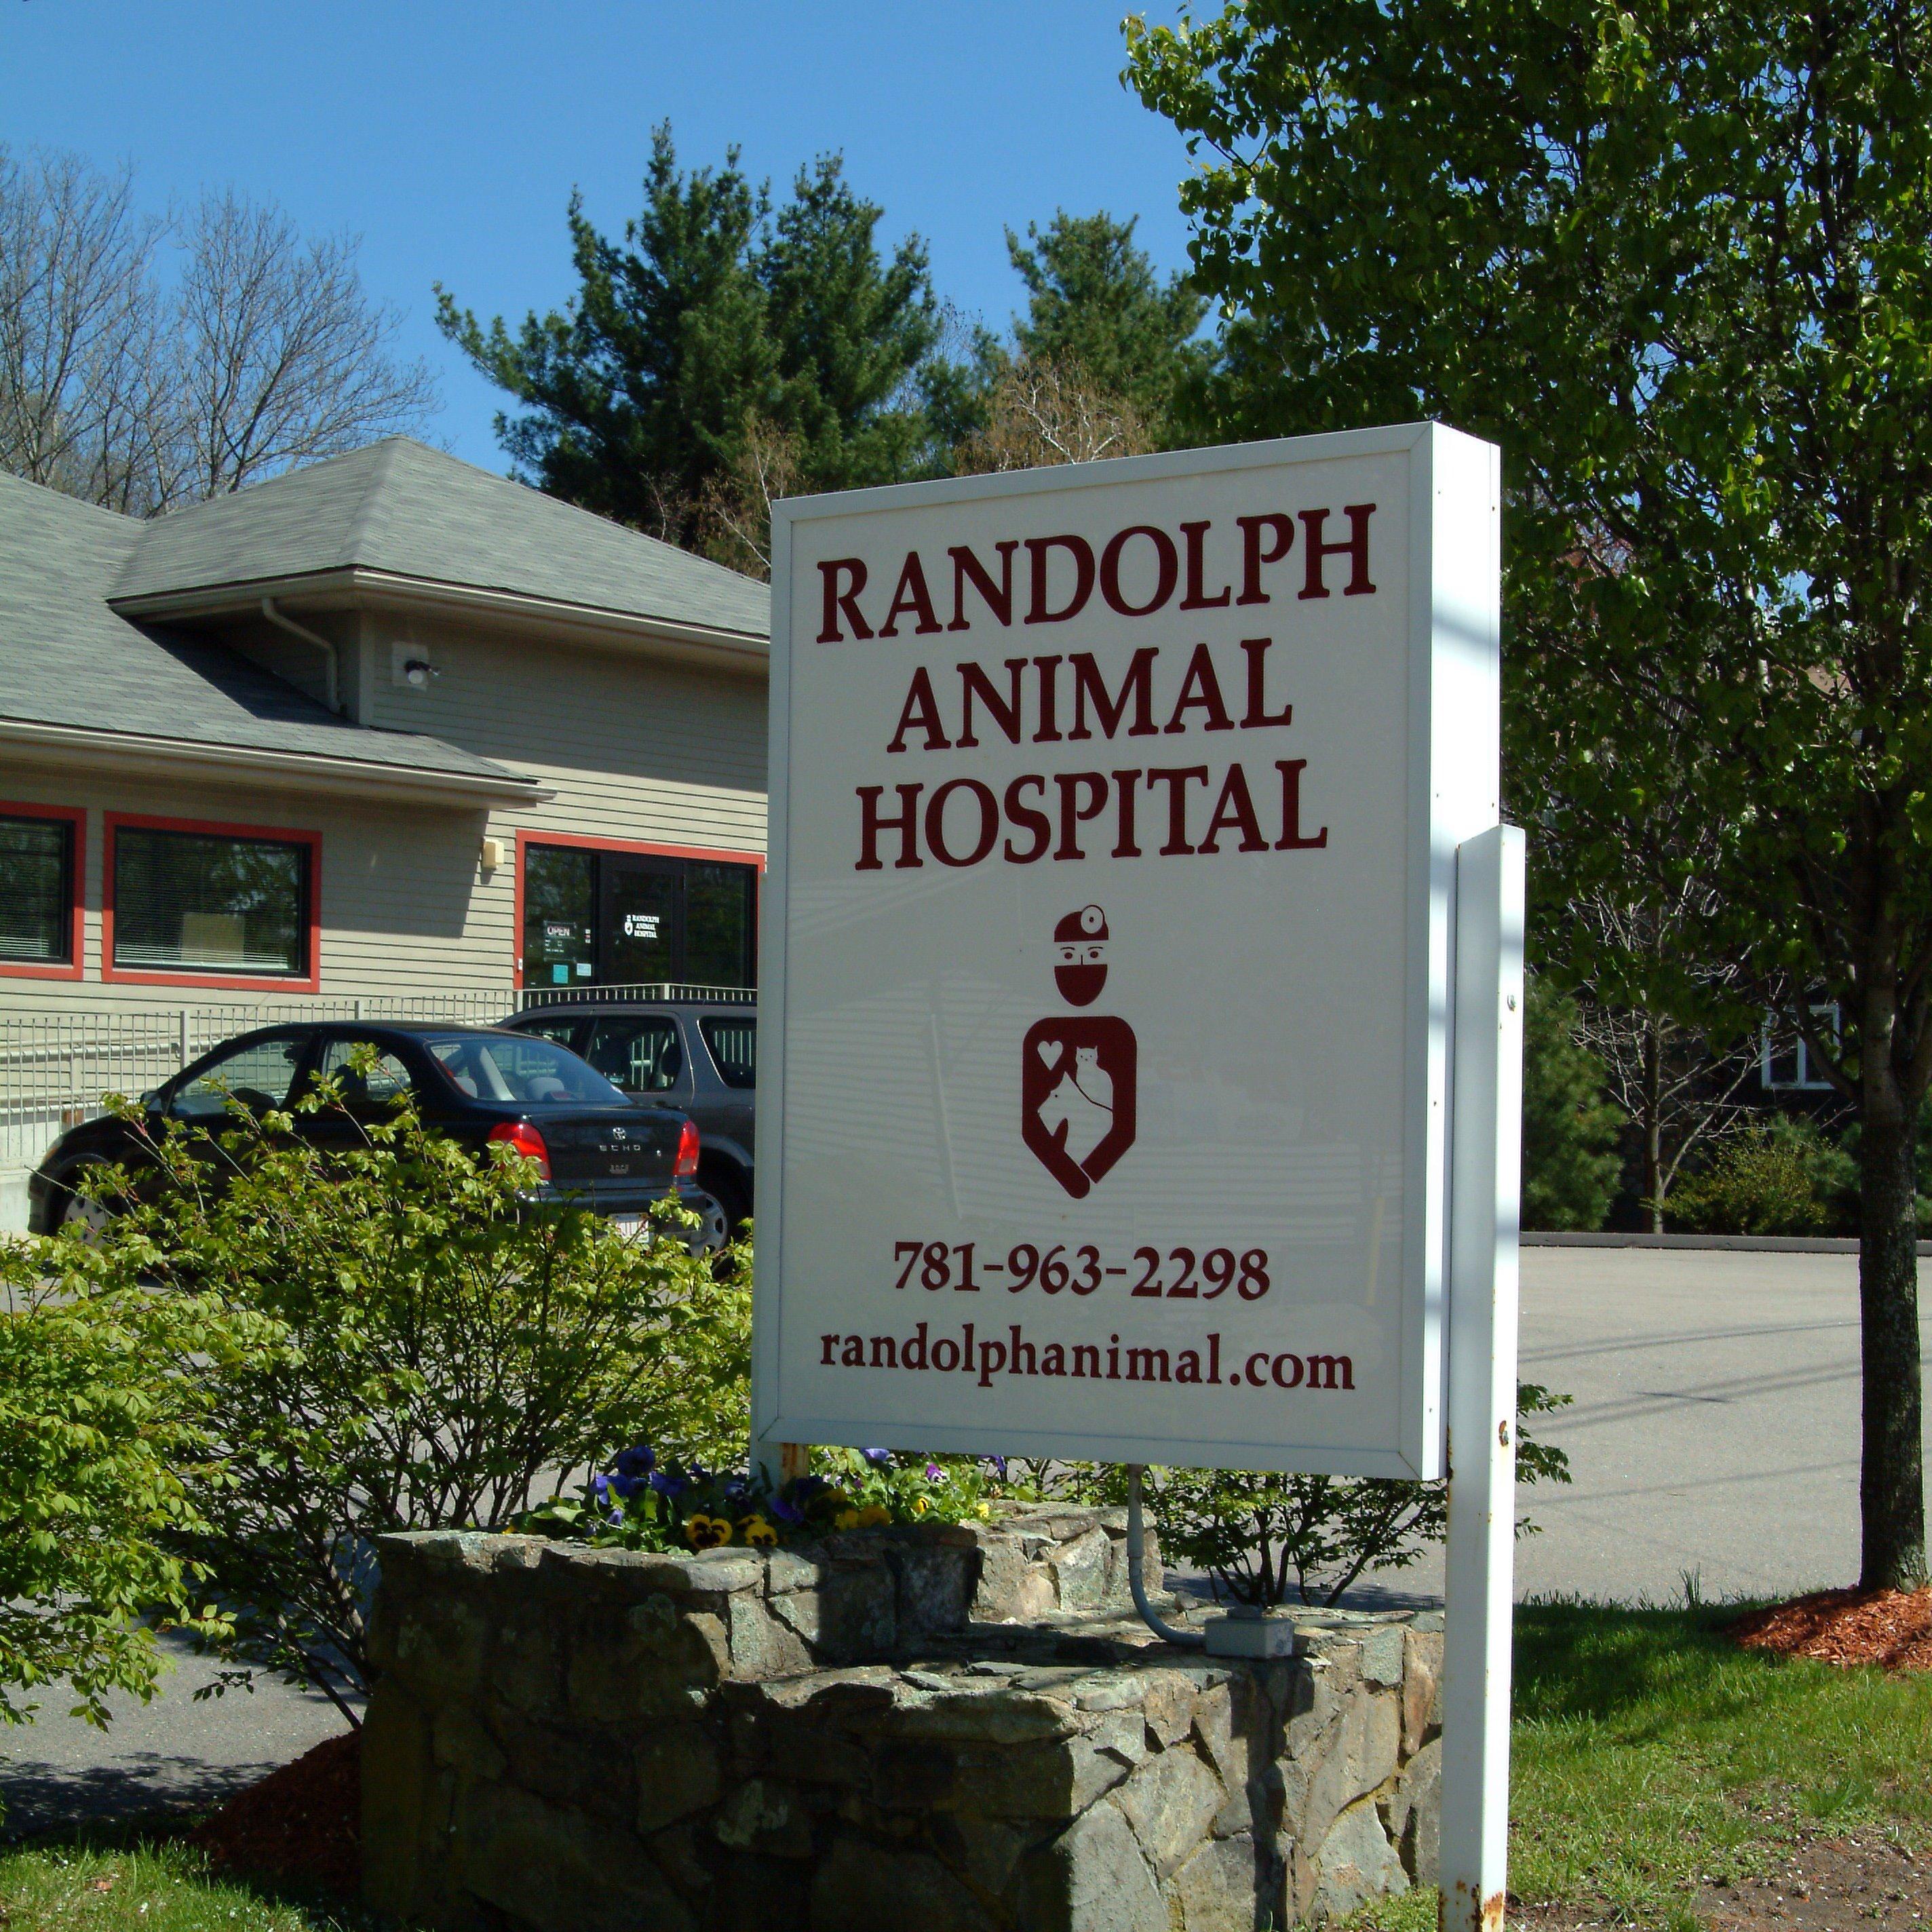 Randolph Animal Hospital Coupons near me in Randolph 8coupons